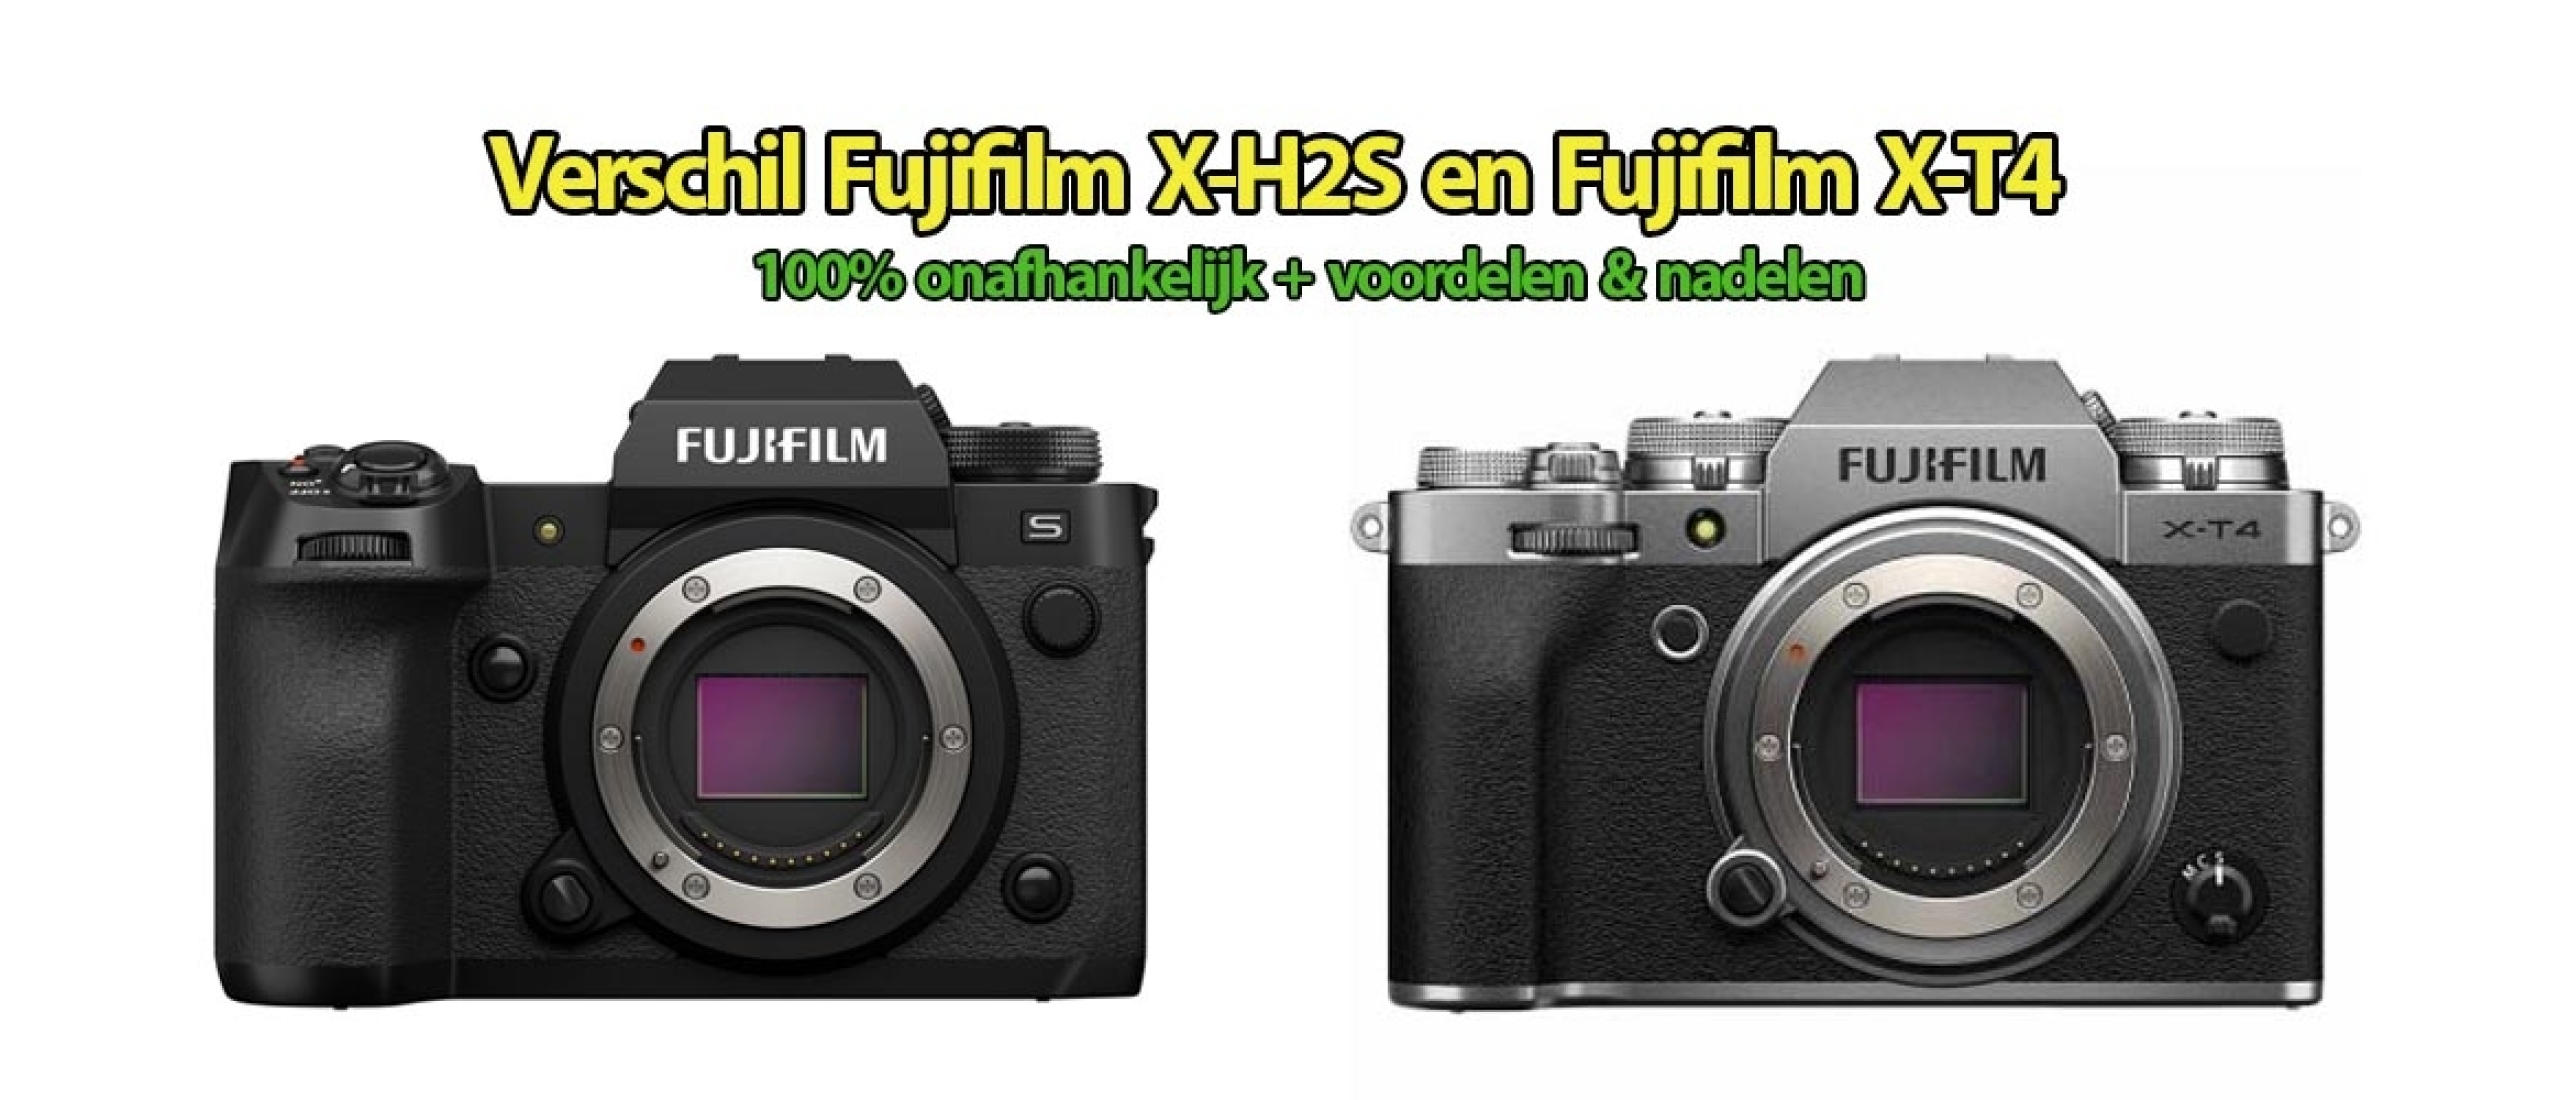 Verschil tussen Fujifilm X-H2S en Fujifilm X-T4 Systeemcamera